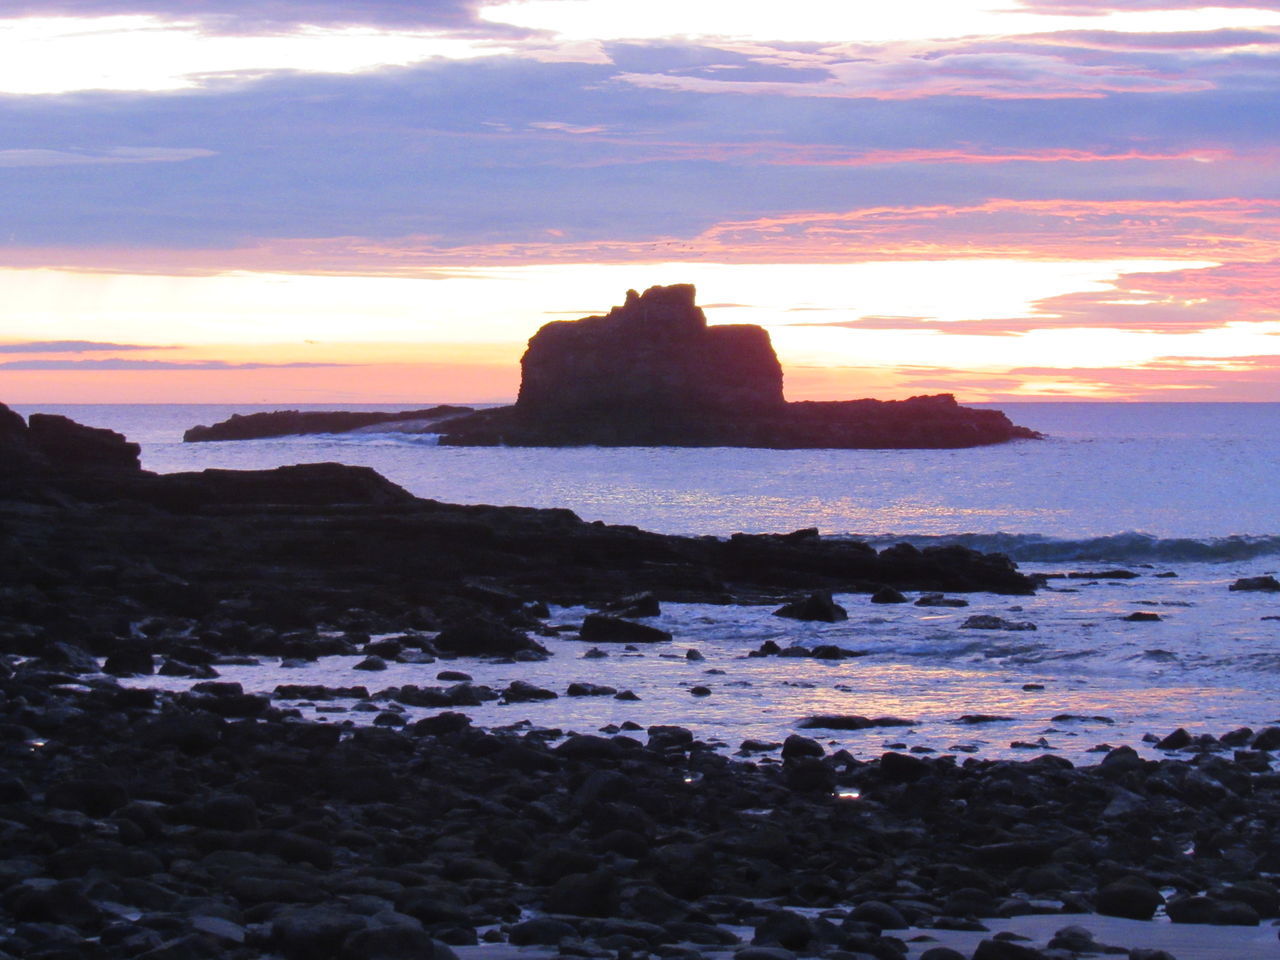 ROCKS ON SEA SHORE AGAINST SUNSET SKY